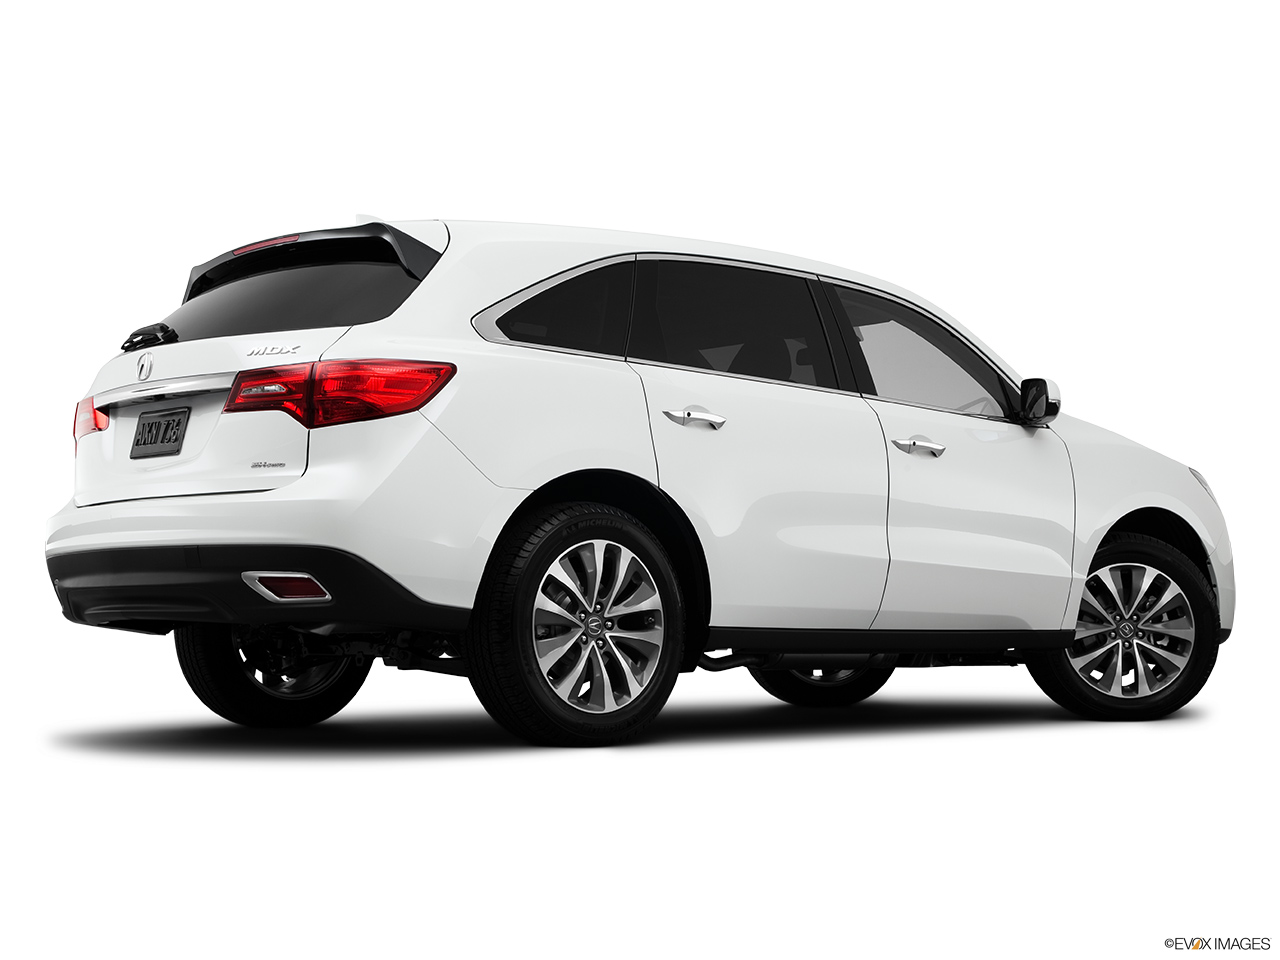 2014 Acura MDX SH-AWD Low/wide rear 5/8. 